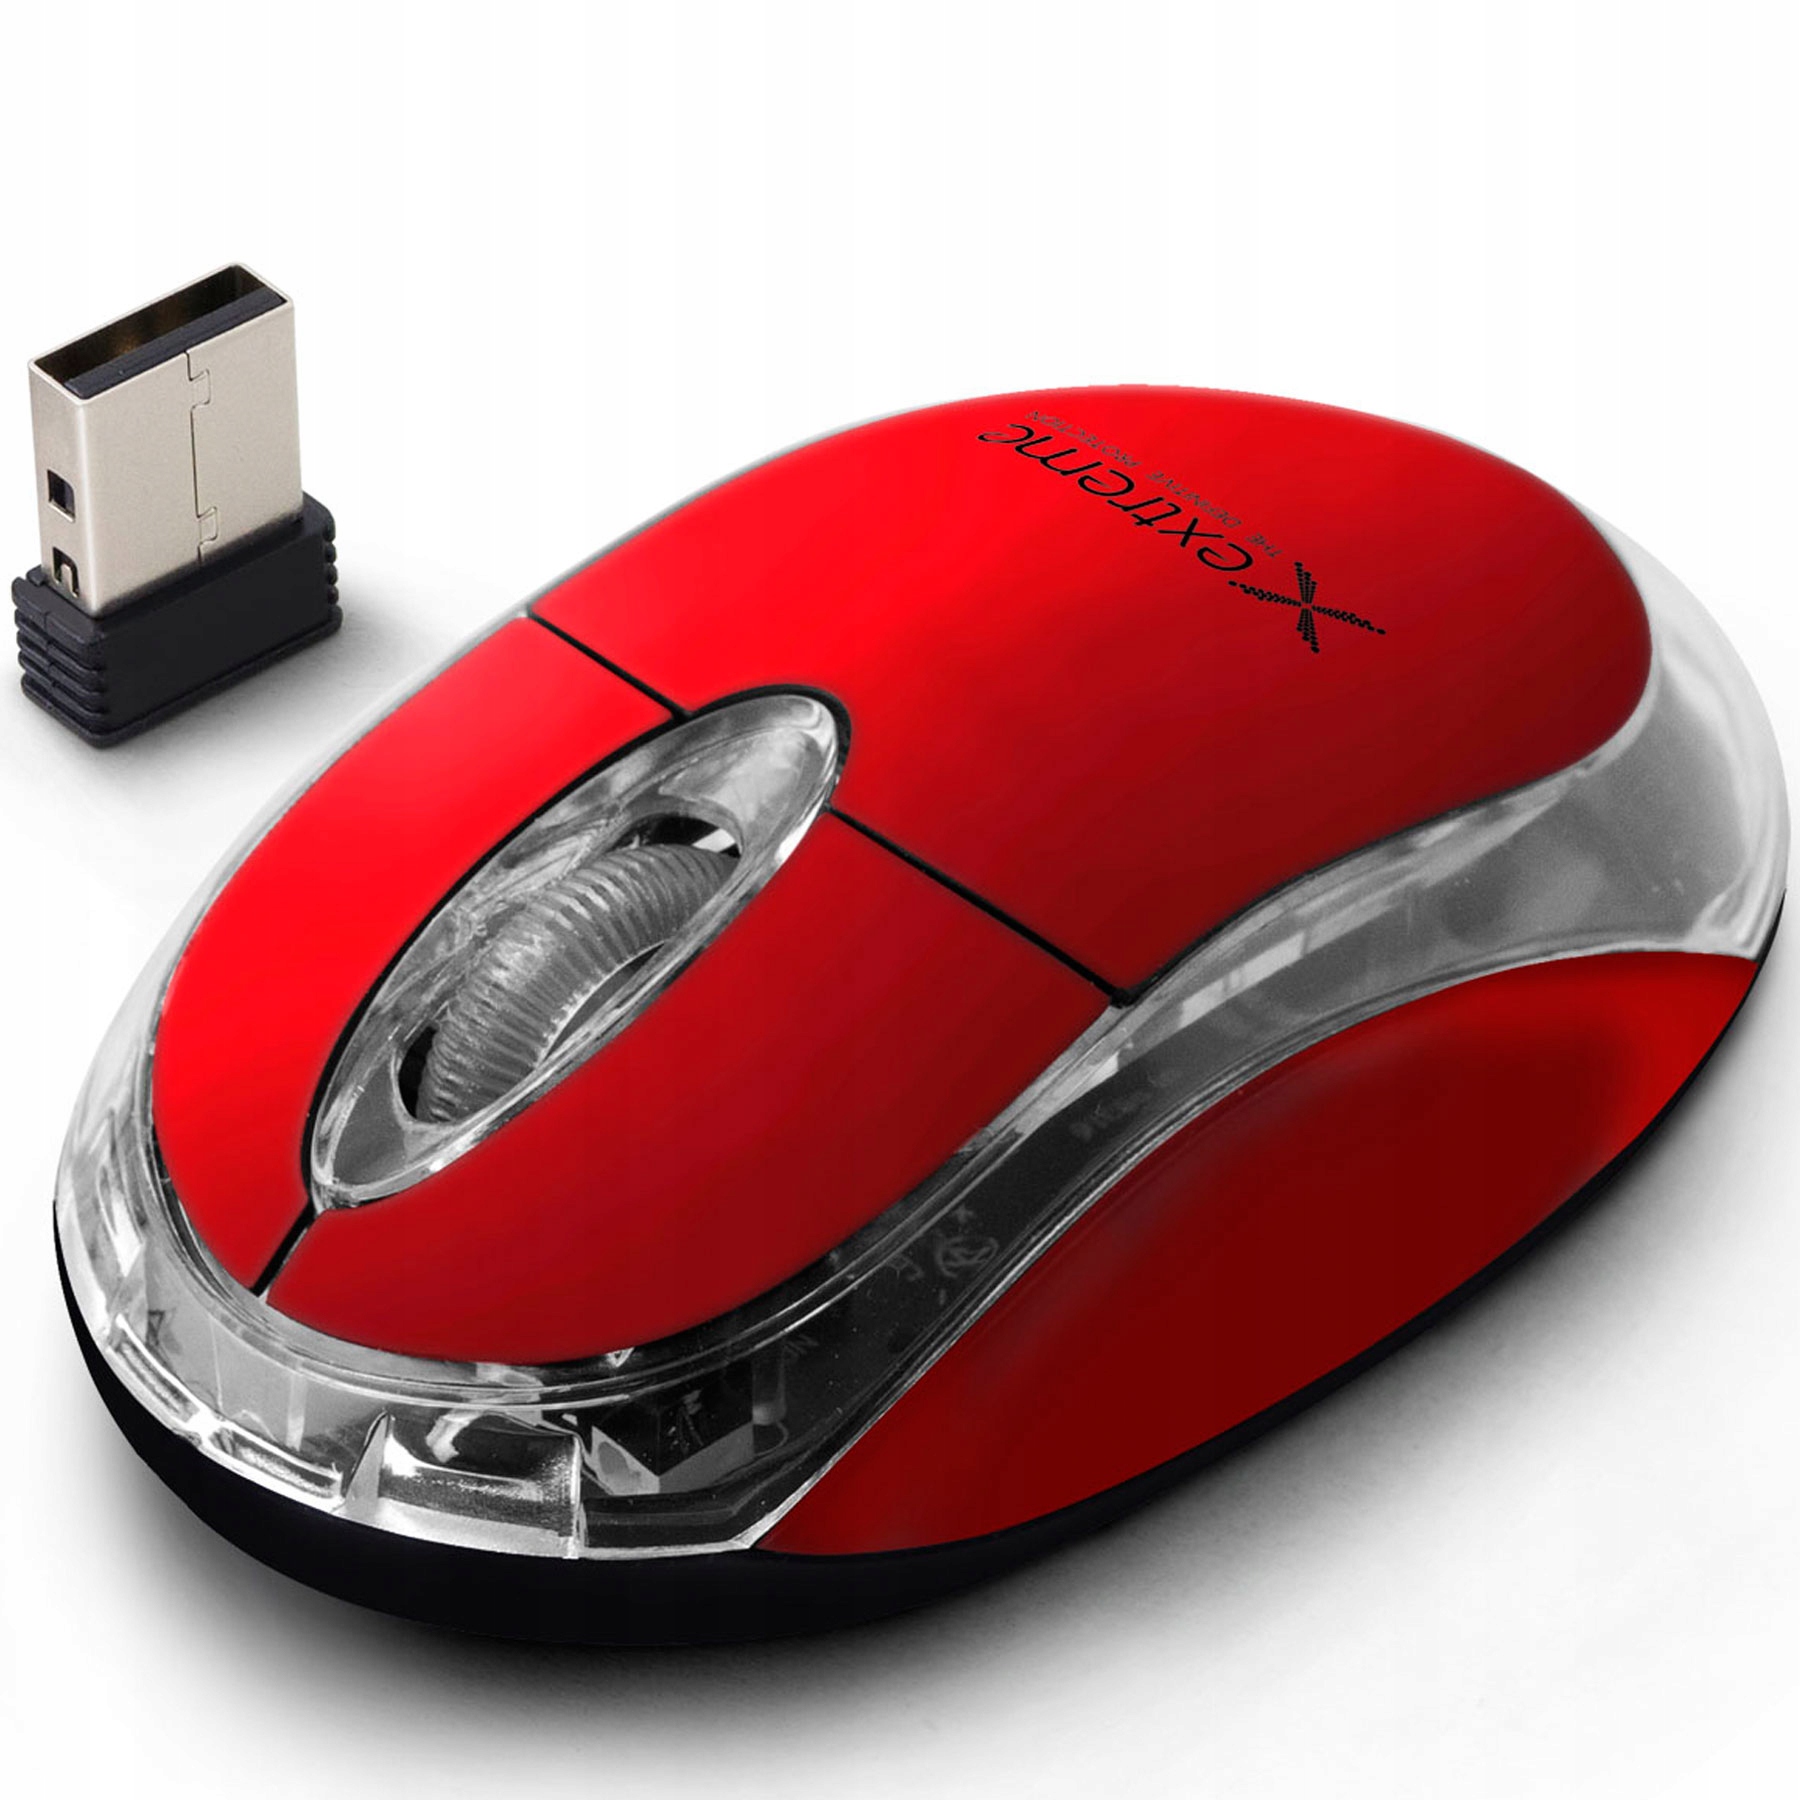 Какая беспроводная мышь лучше. Мышка r102. Мышь USB Acer Red. Оптическая мышка беспроводная. Мышка компьютерная беспроводная оптическая.